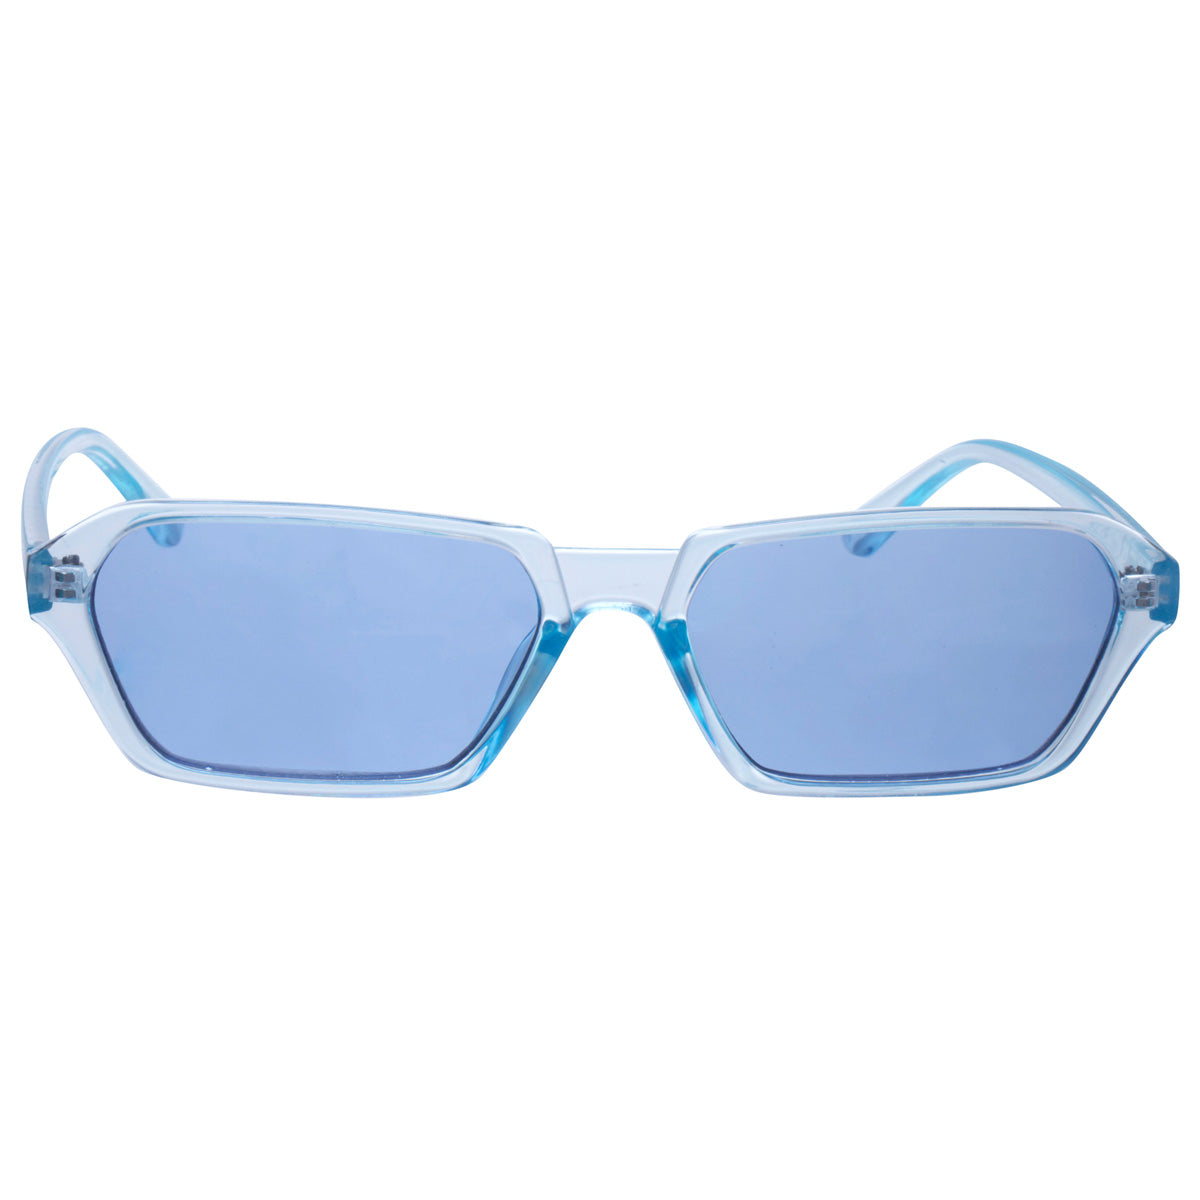 Angled rectangular sunglasses thin frames